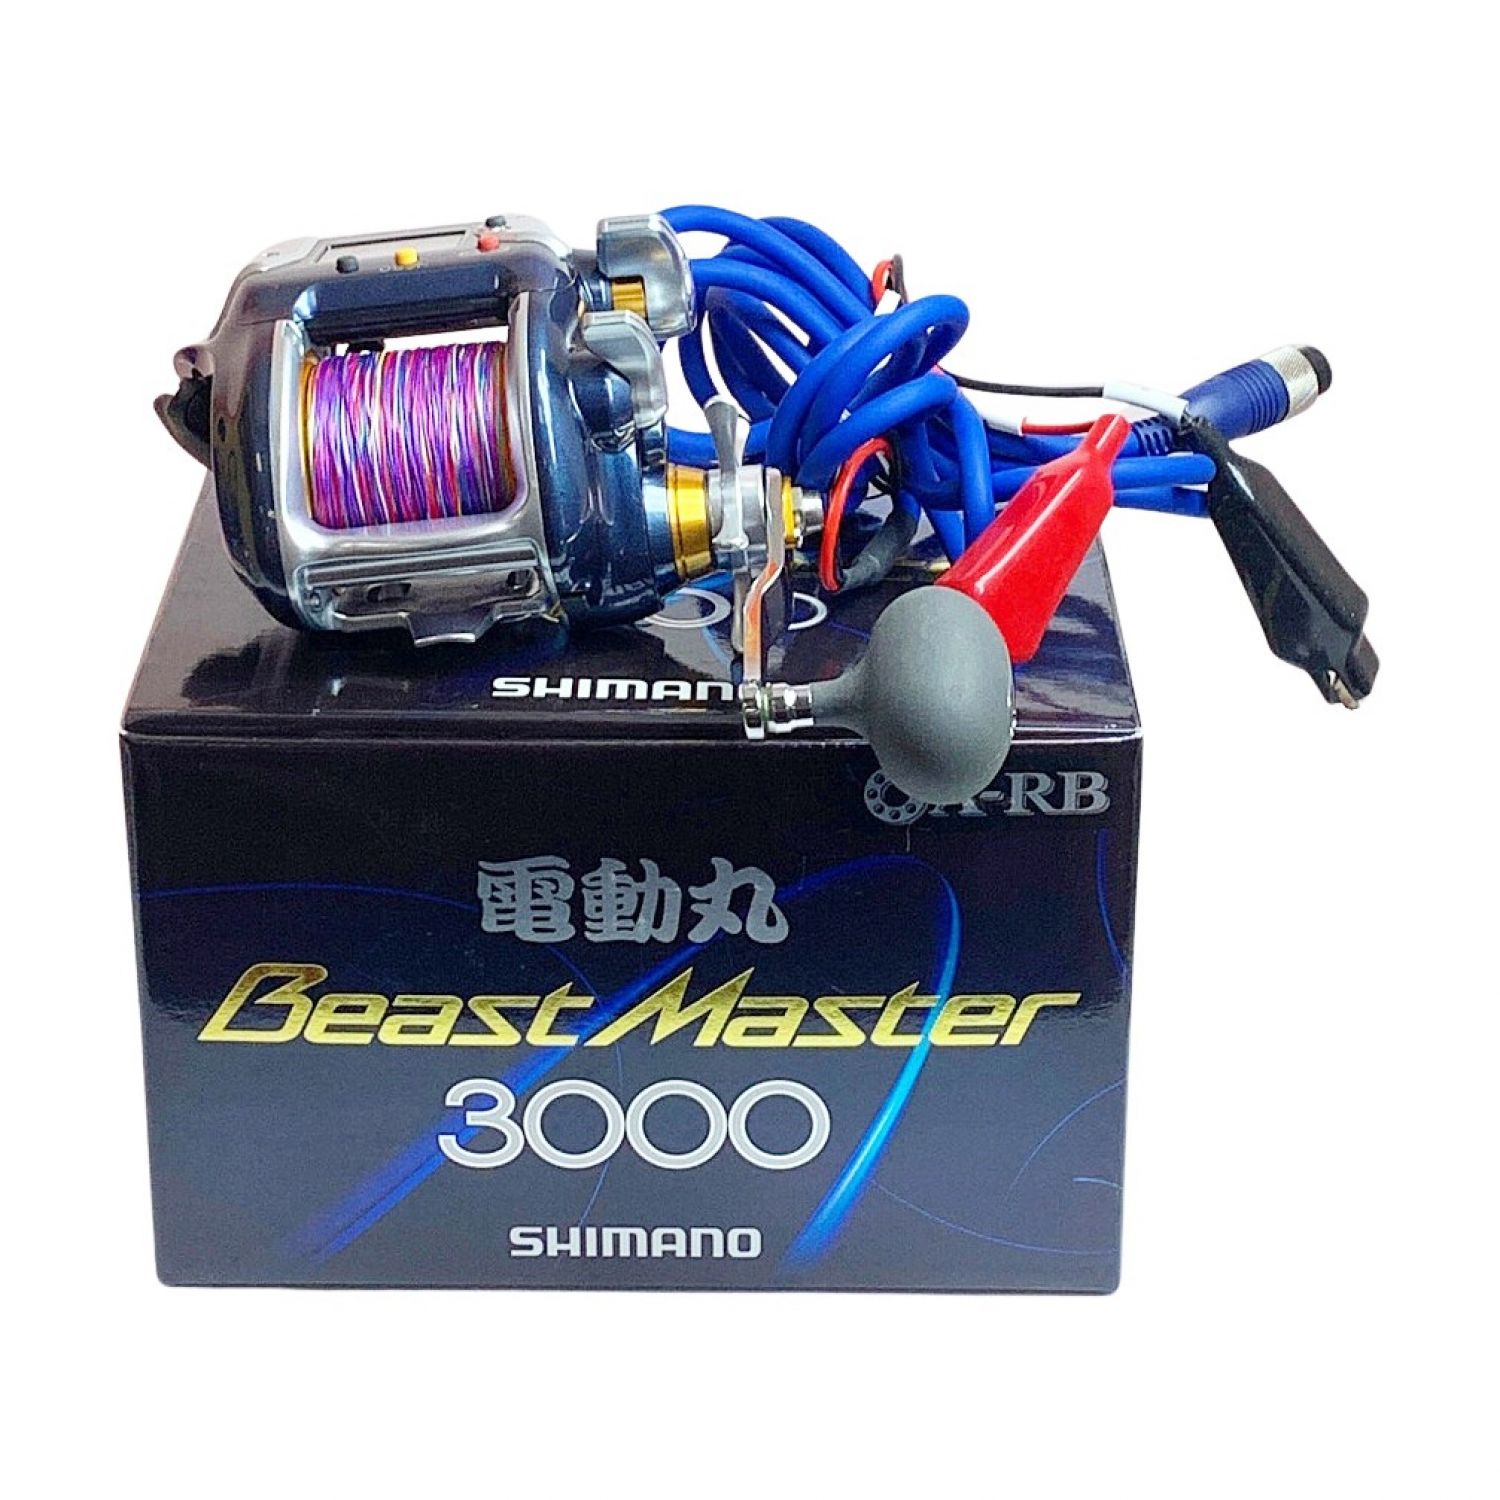 07/BeastMaster3000 SHIMANO/電動丸/BeastMaster/ビーストマスター 